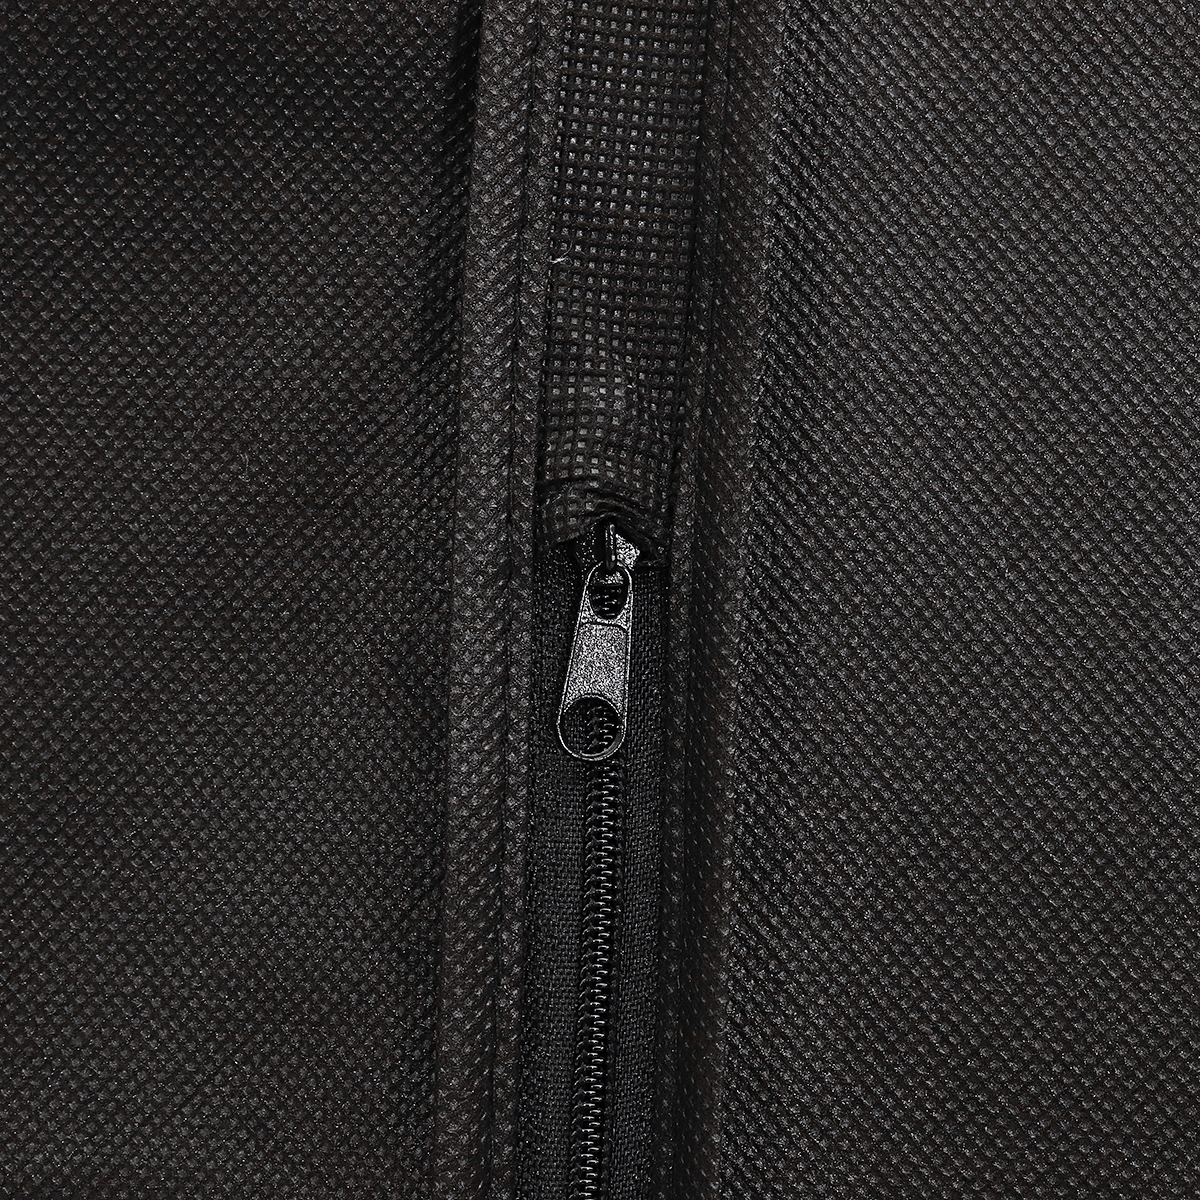 Black-Suit-Dress-Coat-Garment-Storage-Travel-Carrier-Bag-Cover-Hanger-Protector-Clothes-Cover-1395130